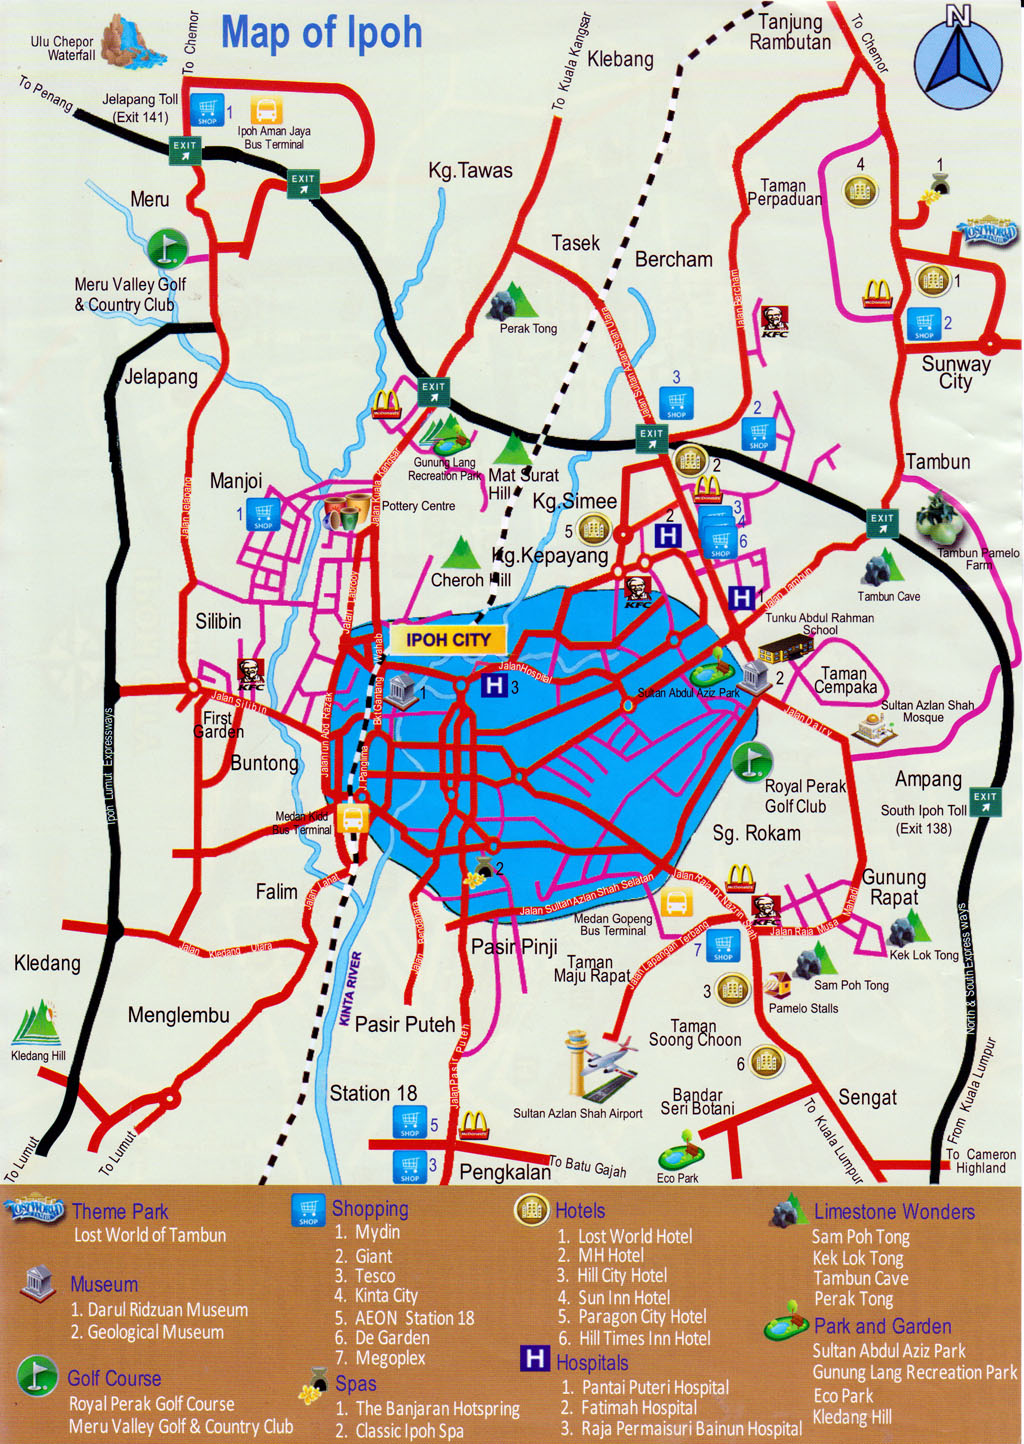 Ipoh City map